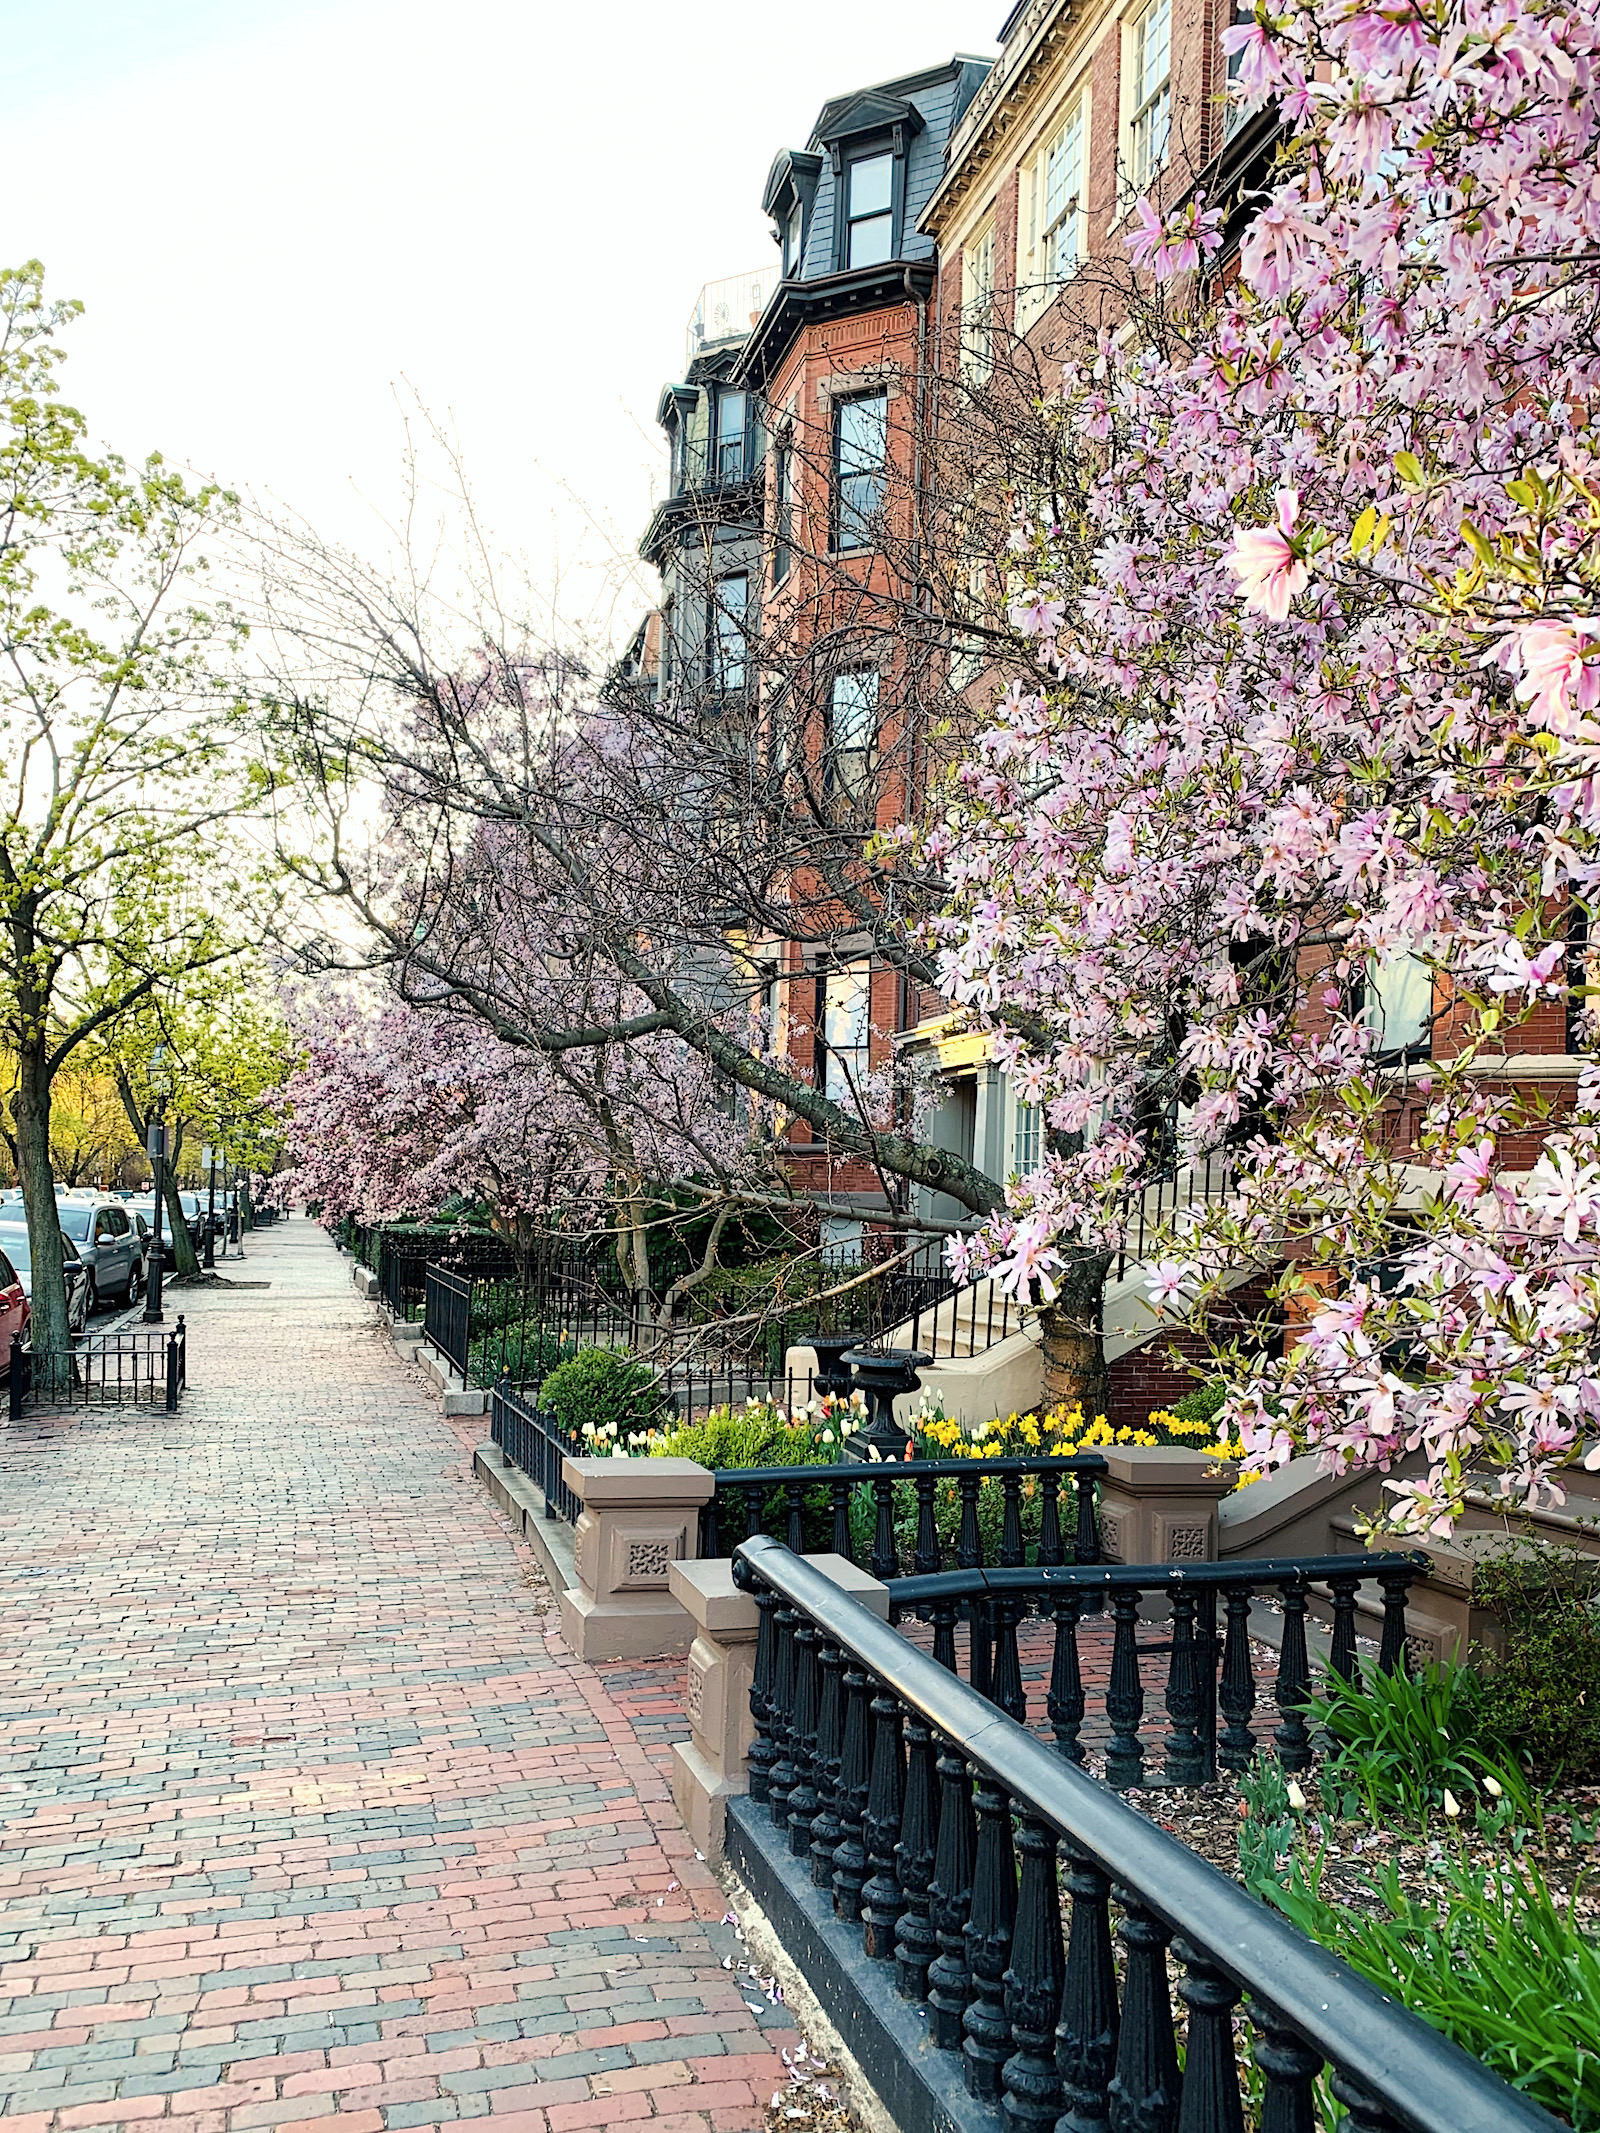 Marlborough Street Boston - Springtime glory